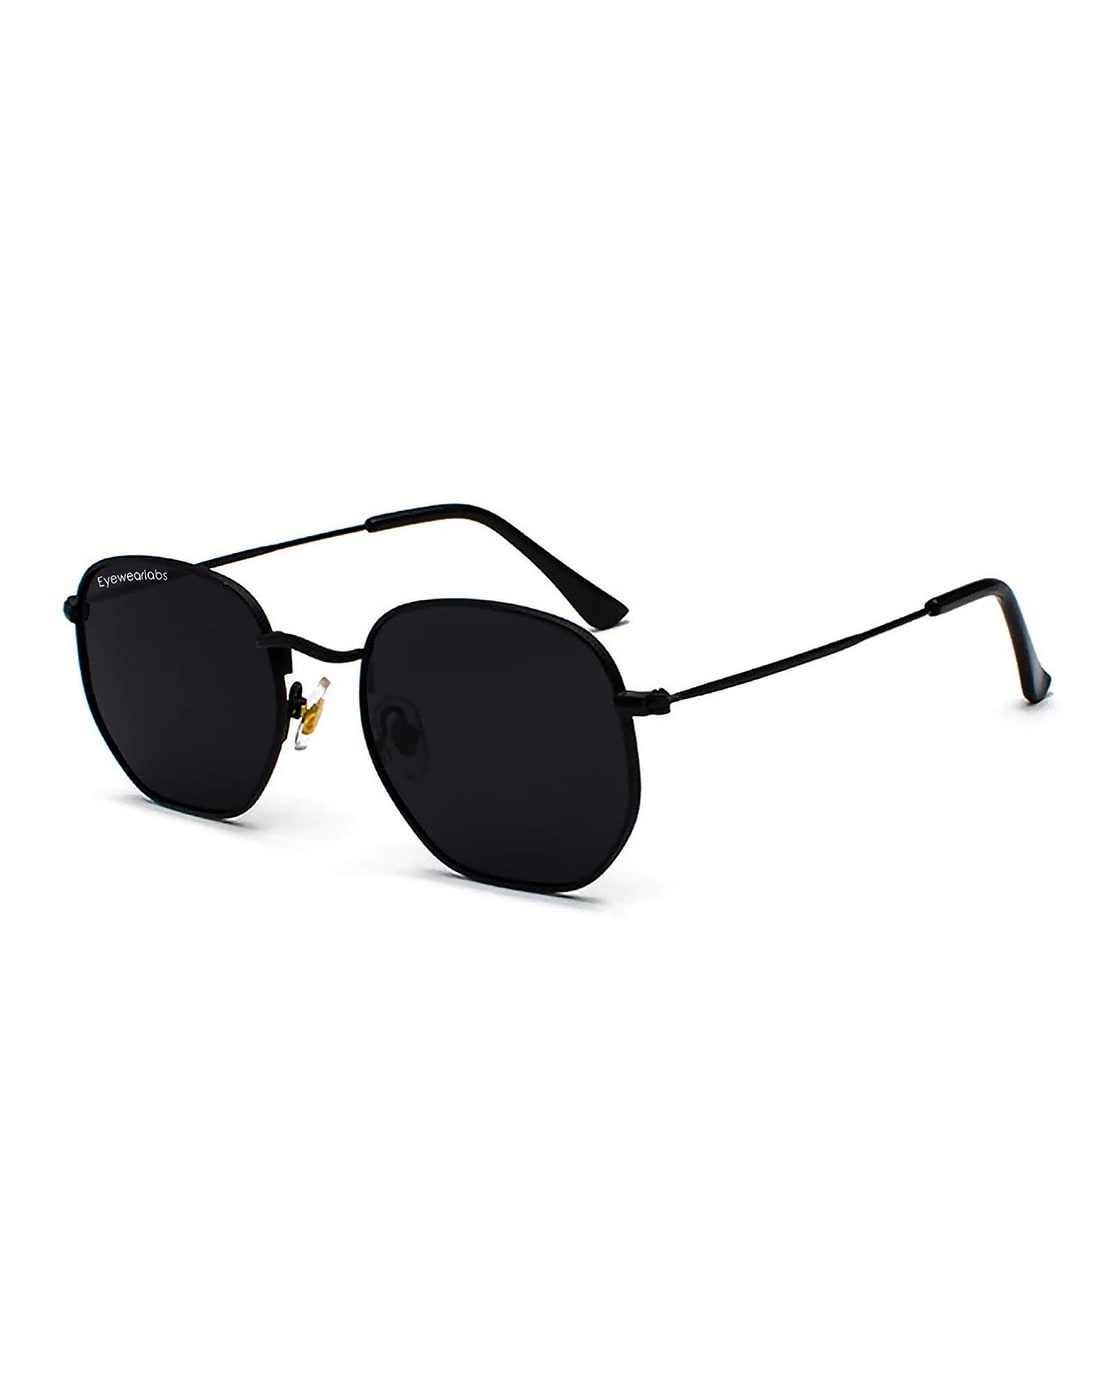 Eyewearlabs Half-Rim Polarized Sporty Sunglasses For Men (Black, OS)